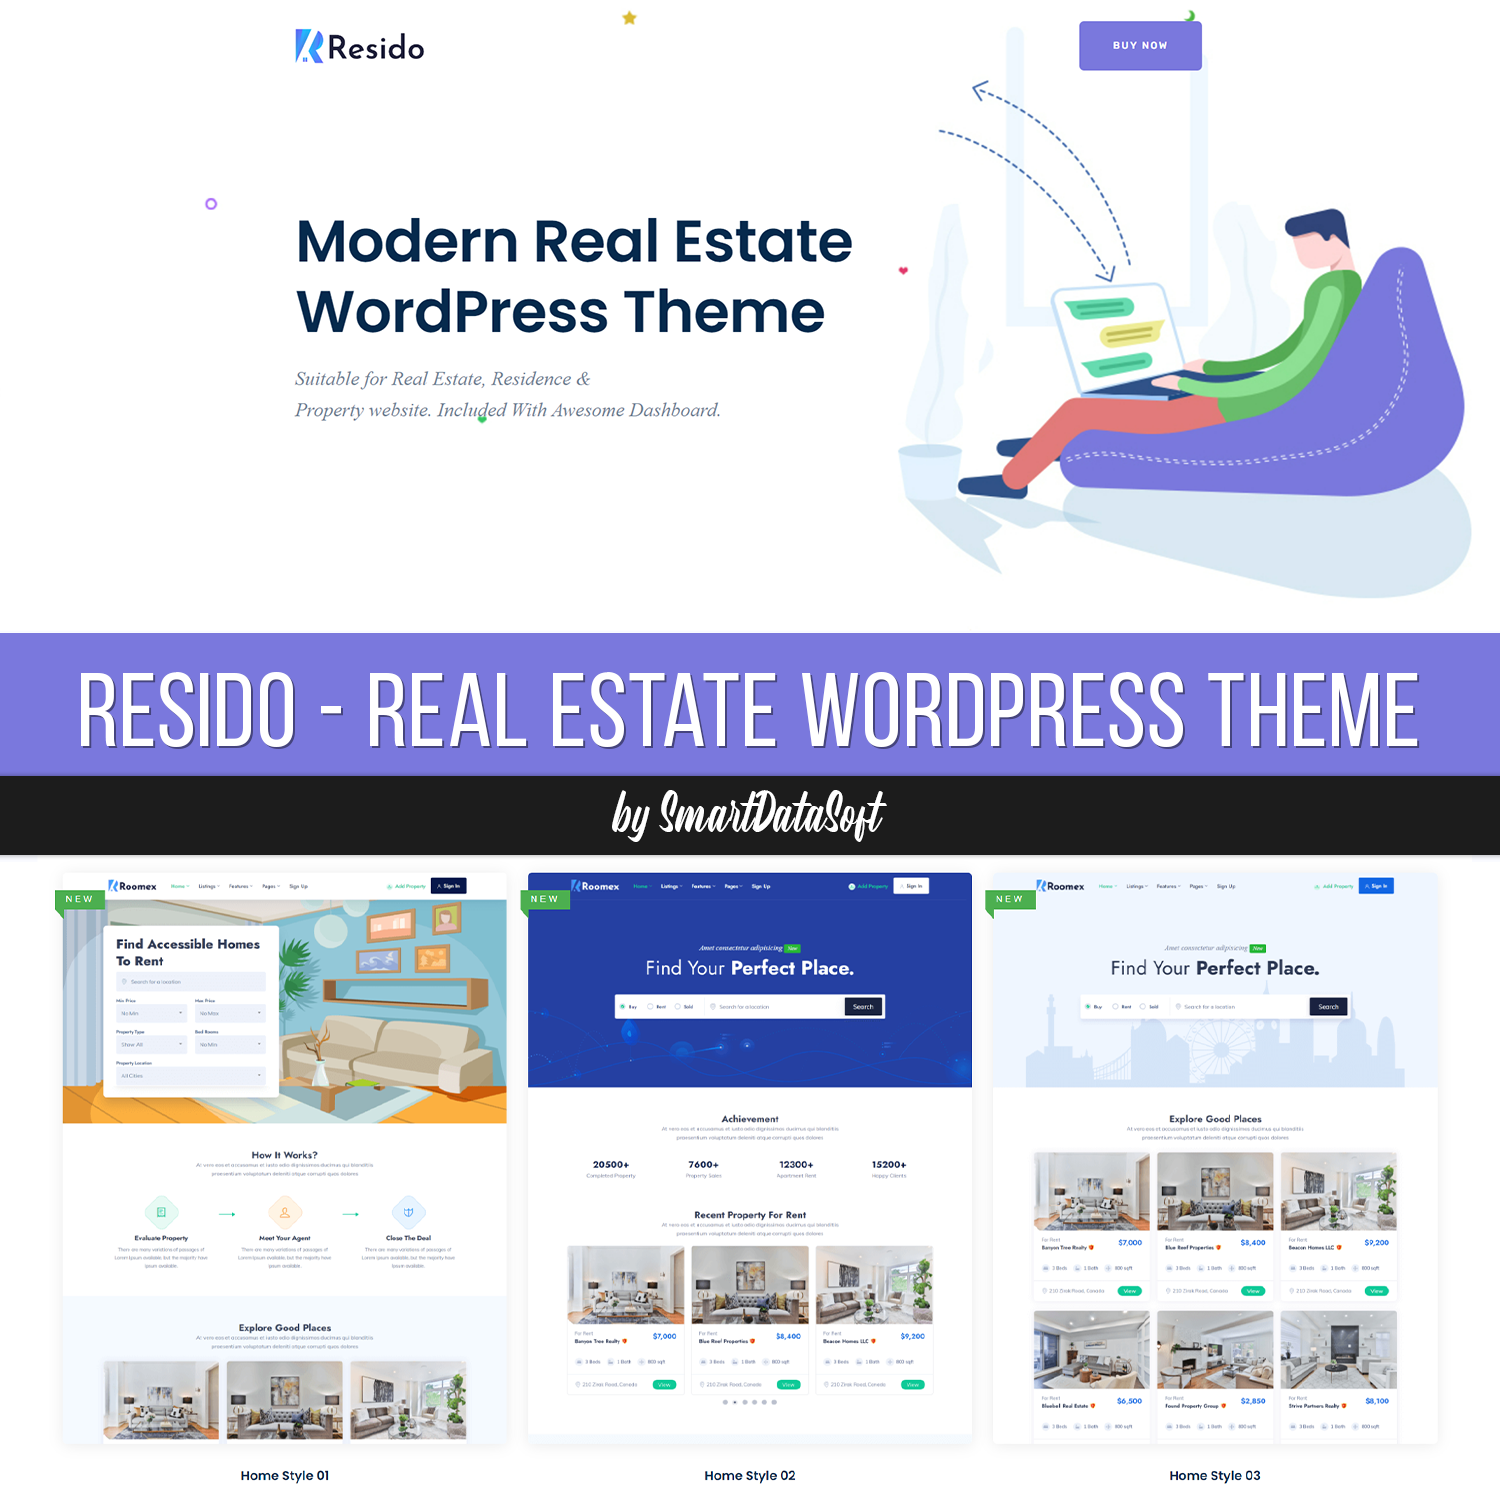 Resido - Real Estate WordPress Theme cover.